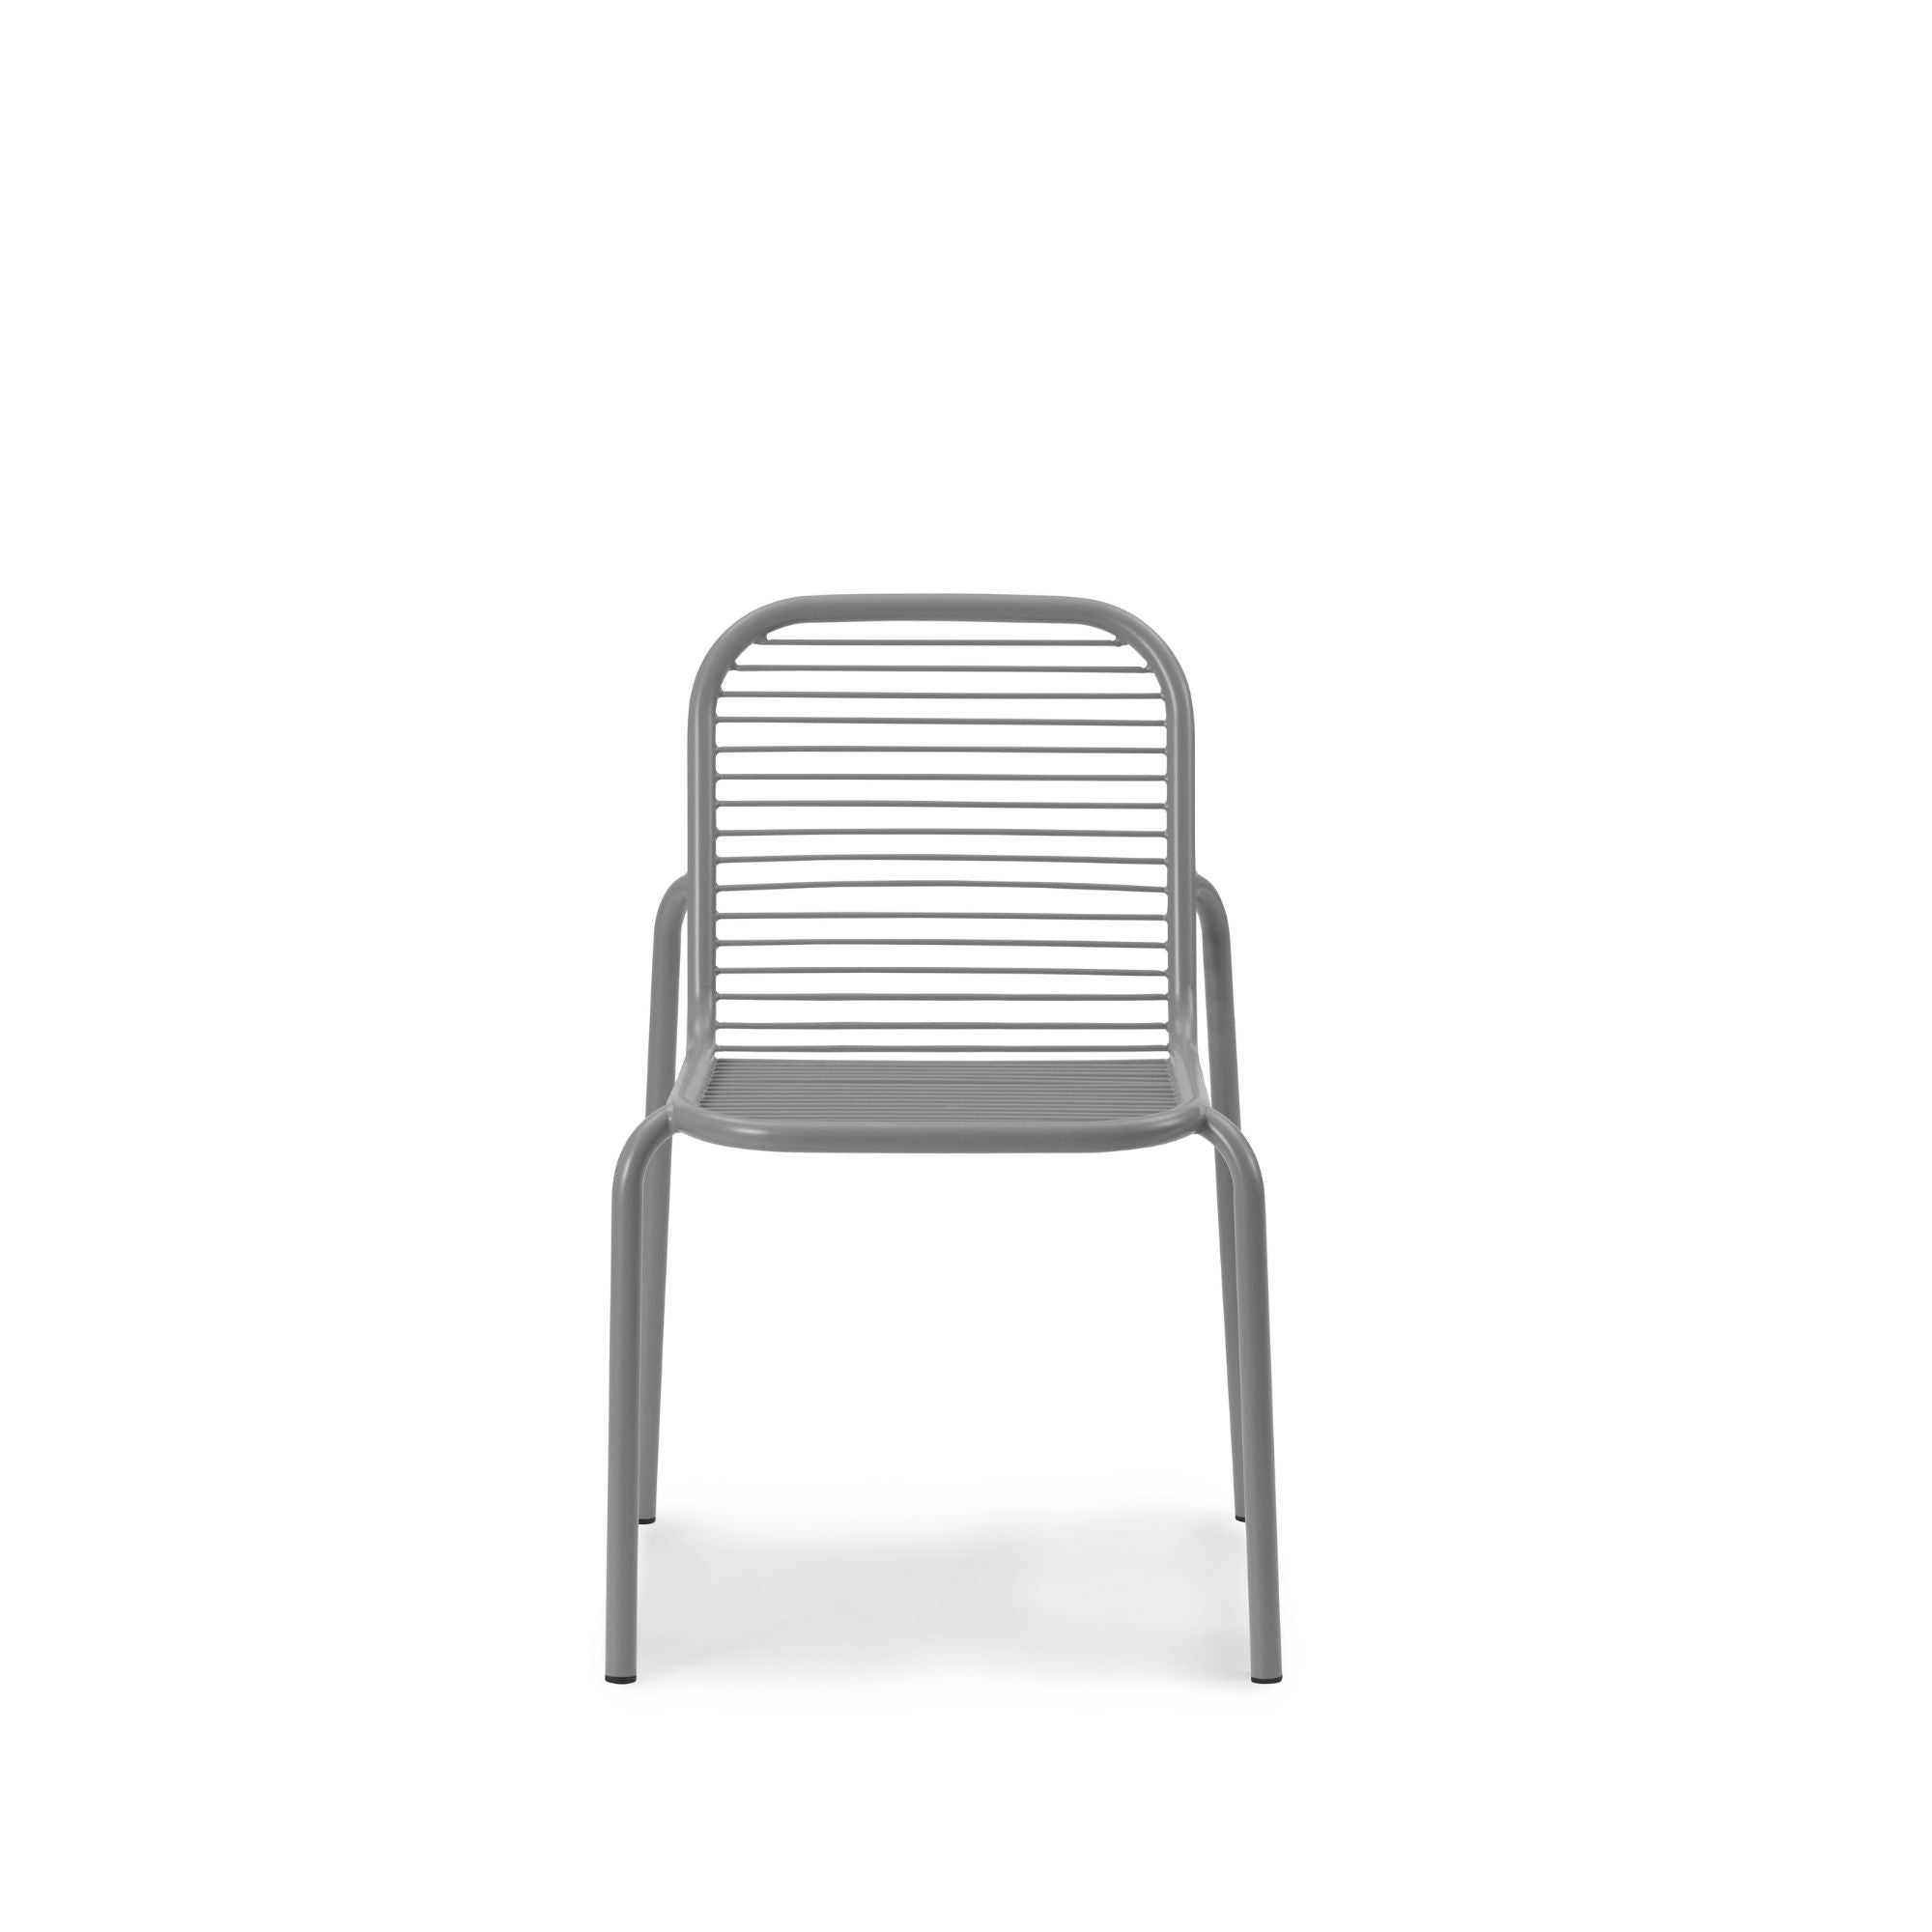 Vig Chair, scaun pentru exterior